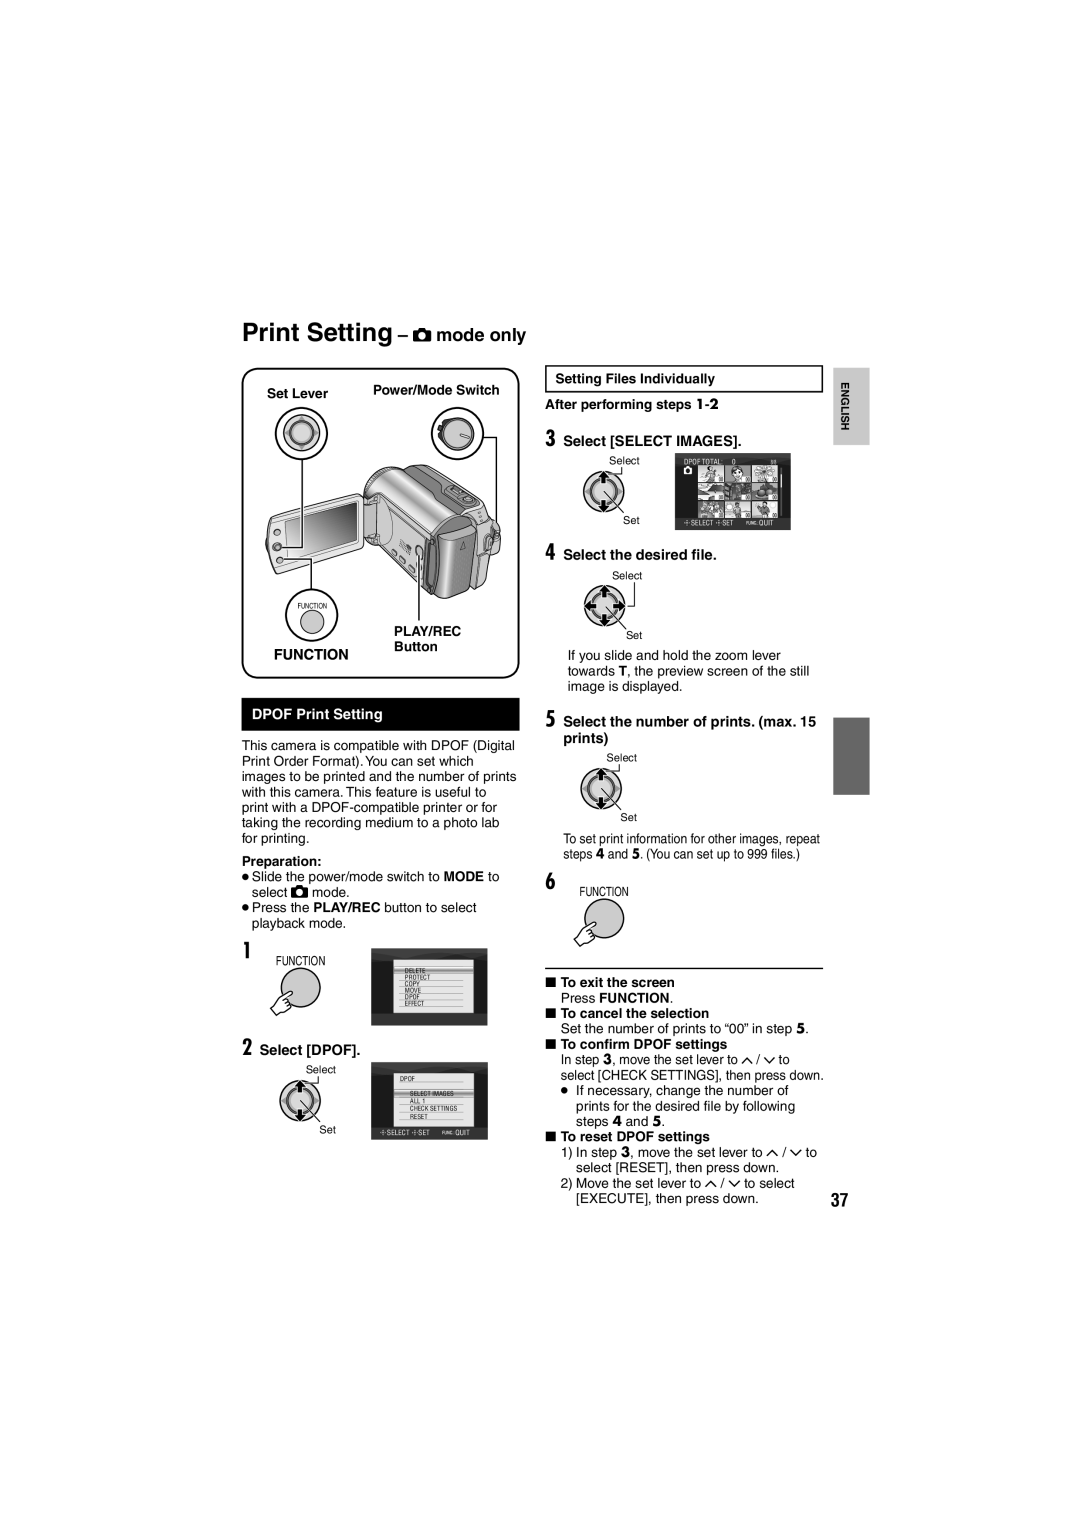 JVC GZ-MG130E/EK Print Setting - # mode only, Select SELECT IMAGES, Select the desired ﬁle, DPOF Print Setting, Set Lever 